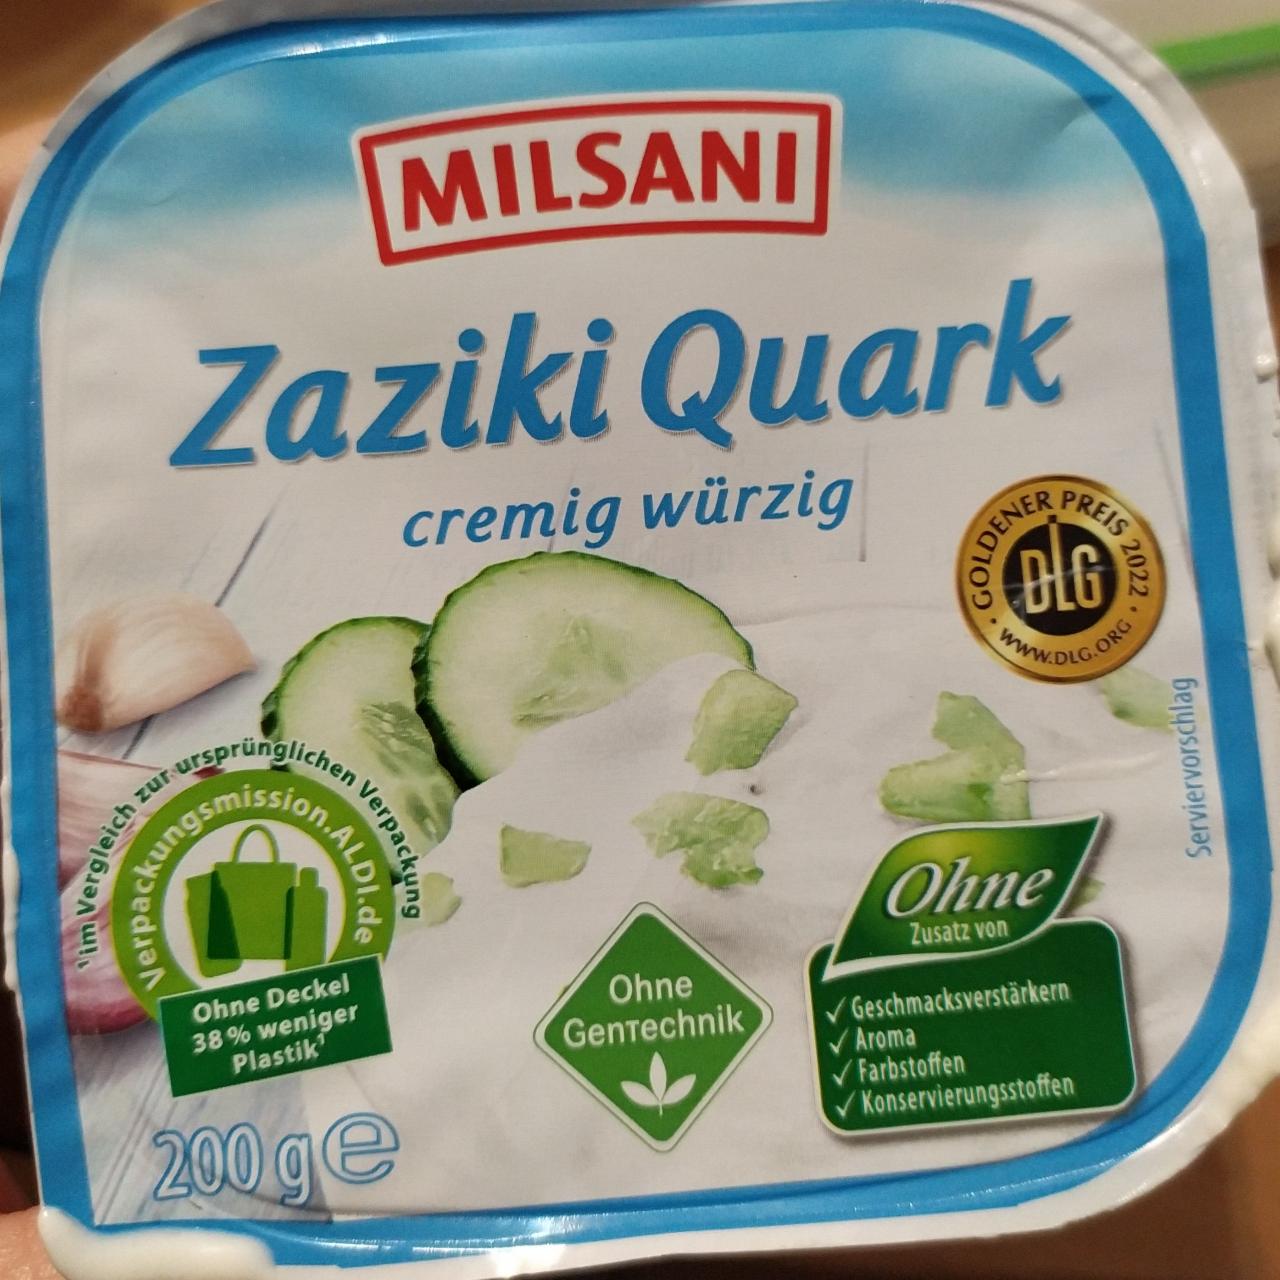 Képek - Zaziki quark Milsani